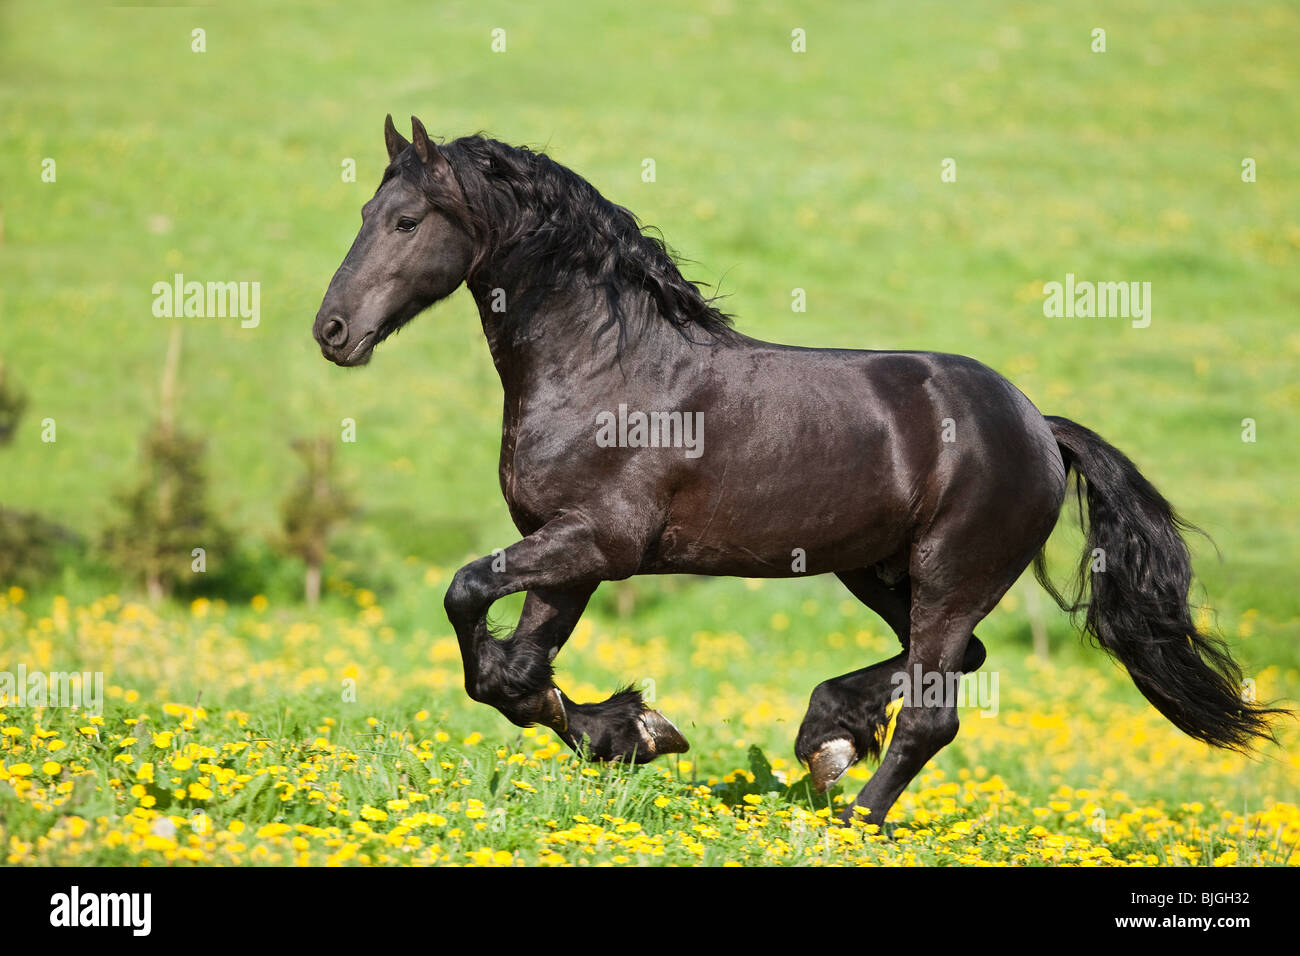 http://c8.alamy.com/comp/BJGH32/friesian-horse-galloping-on-a-meadow-BJGH32.jpg